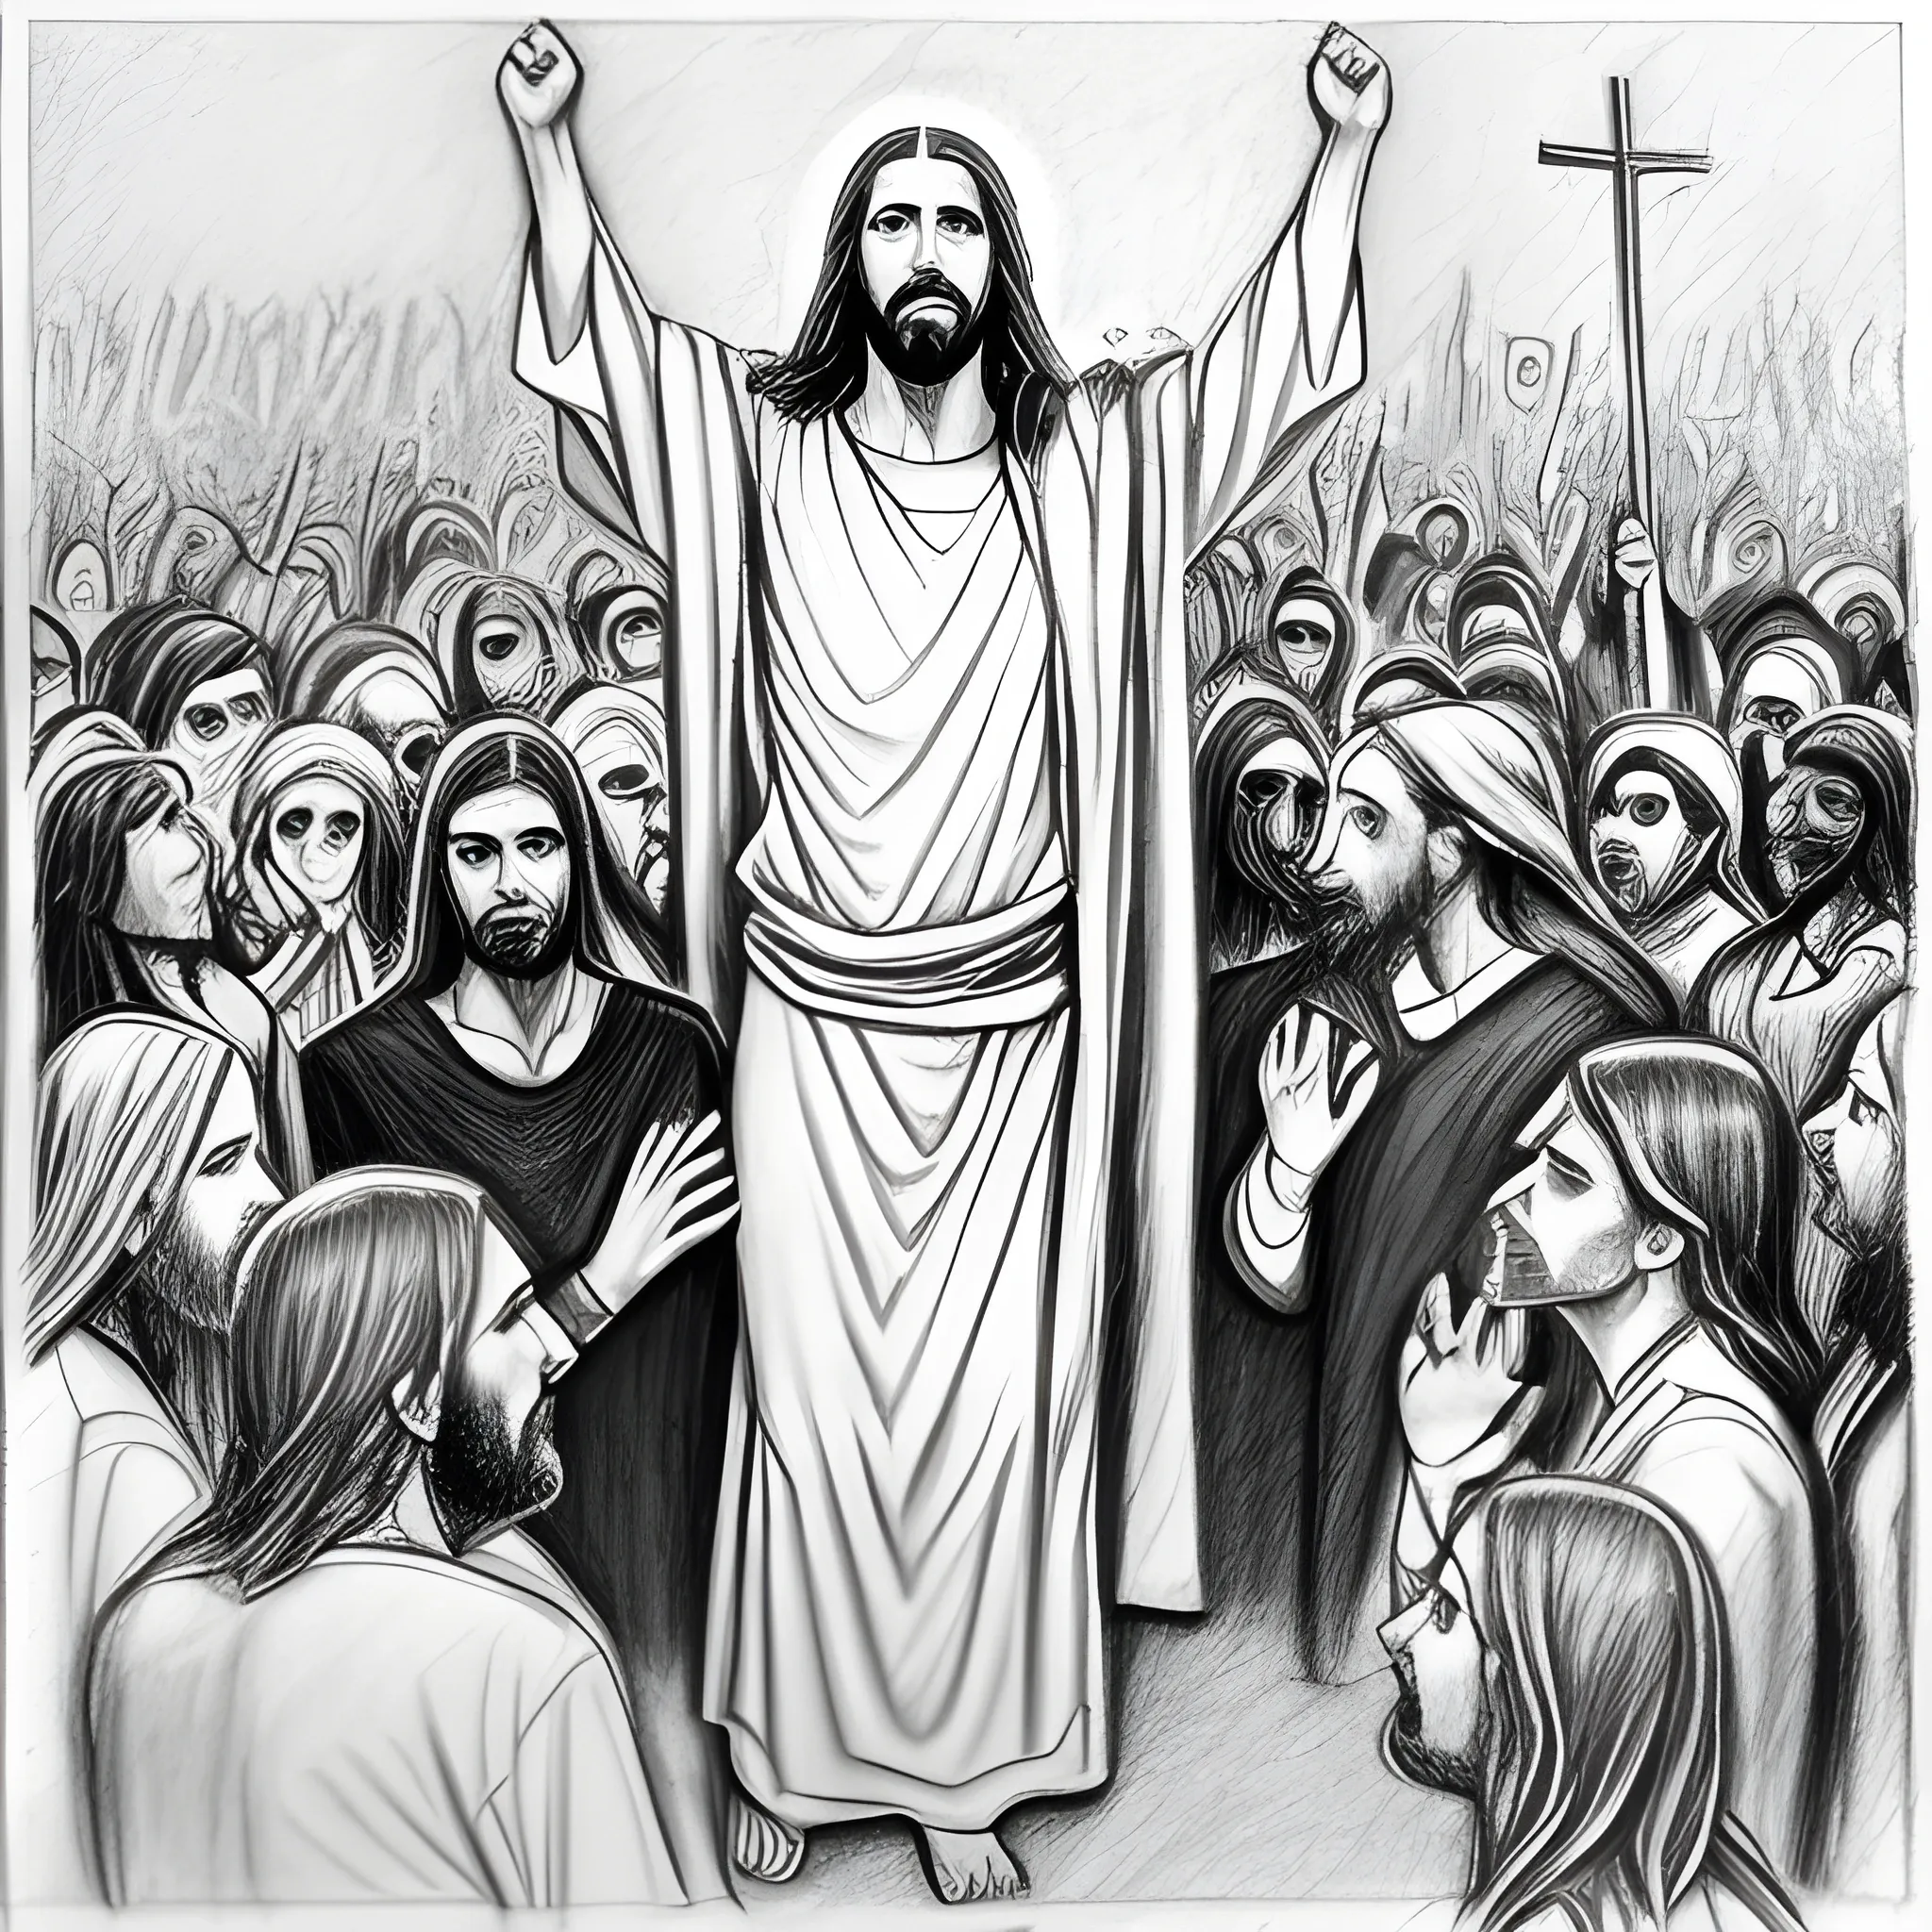 Jesus protesting crowd people around him
, Pencil Sketch